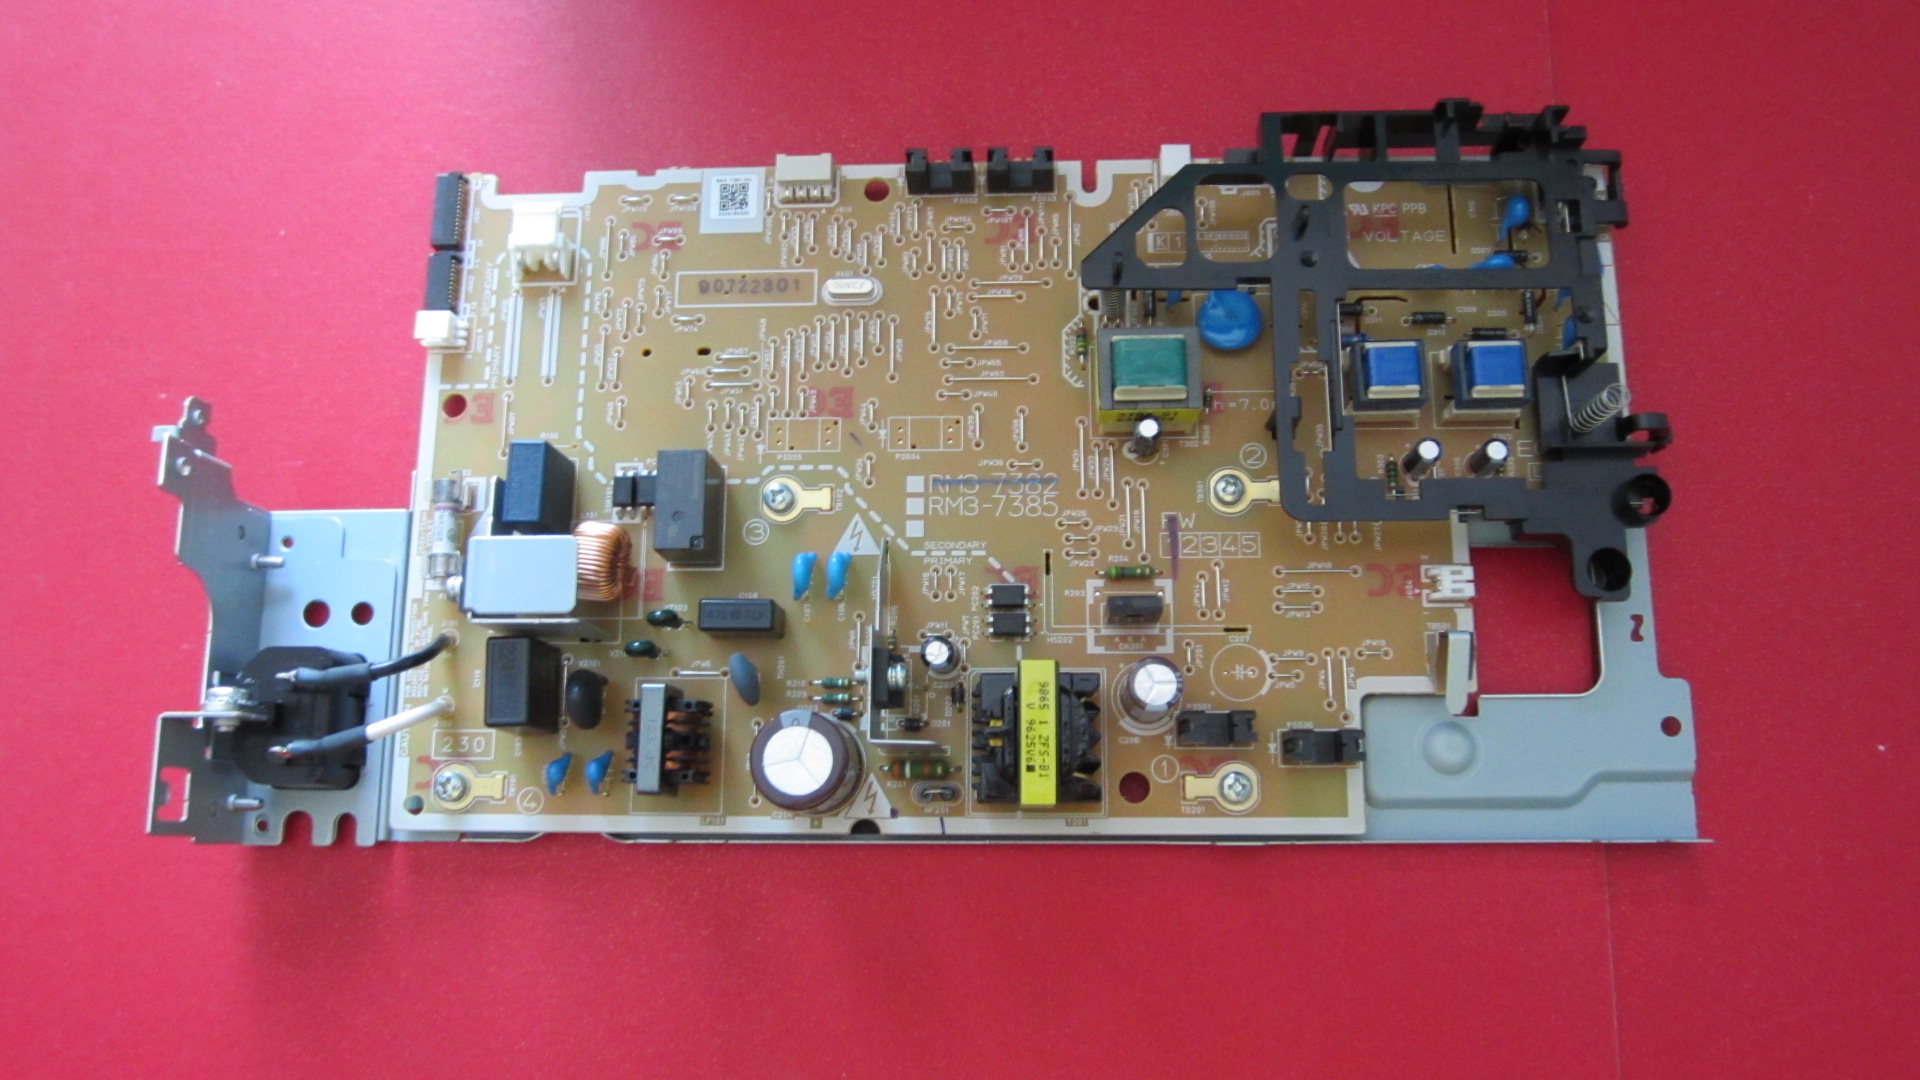 Power supply board M15w Engine Controller Pcb Ass'Y (220-240v) RM3-7388-000CN HP LaserJet Pro M15w